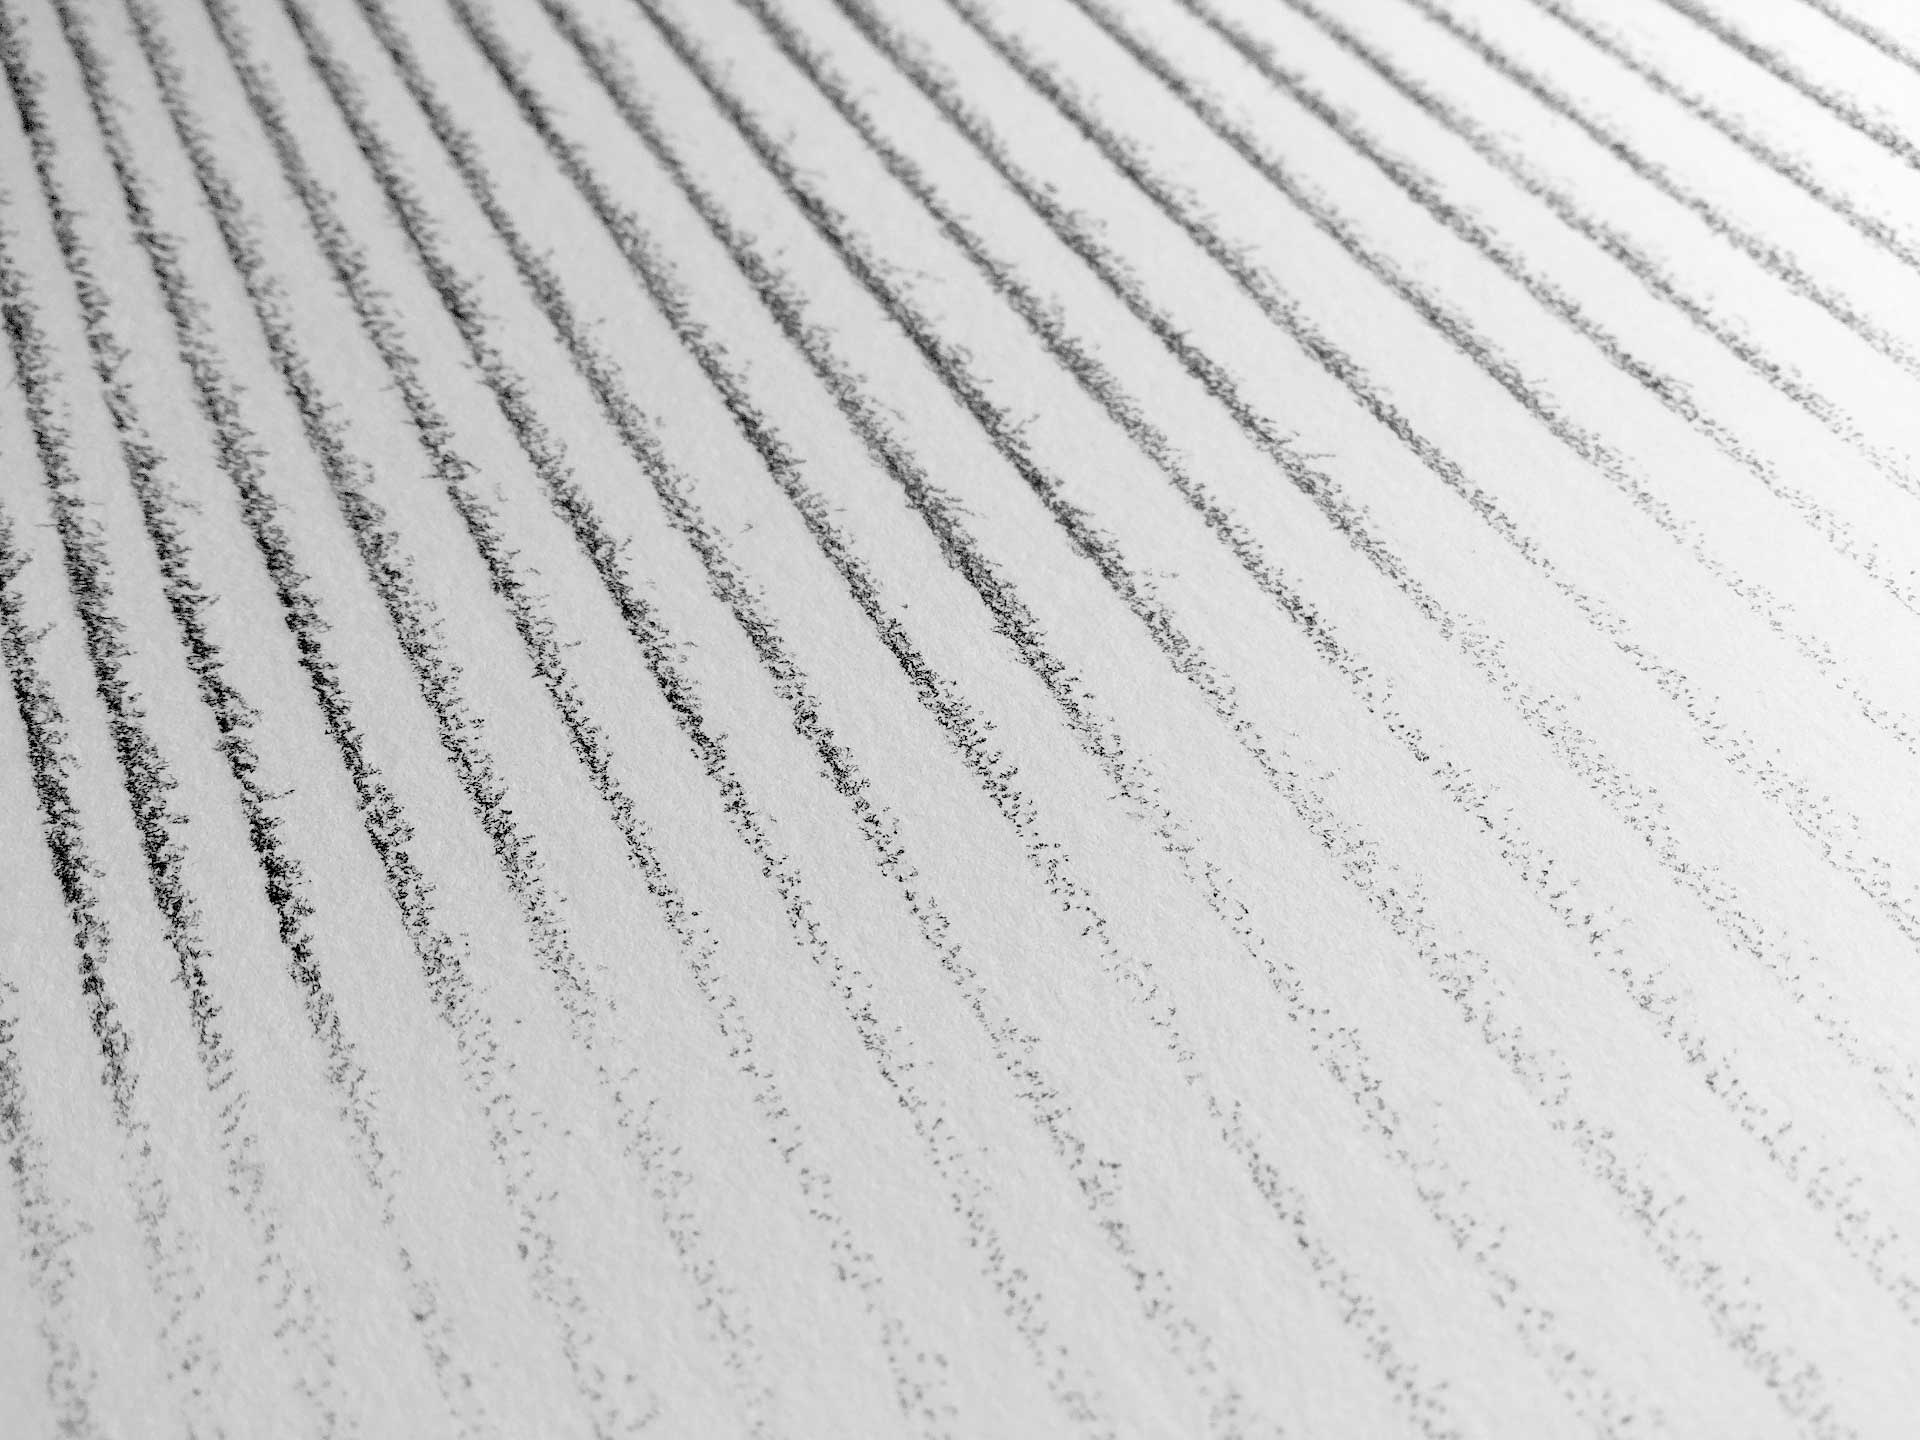 Corrugated #1 / Detail